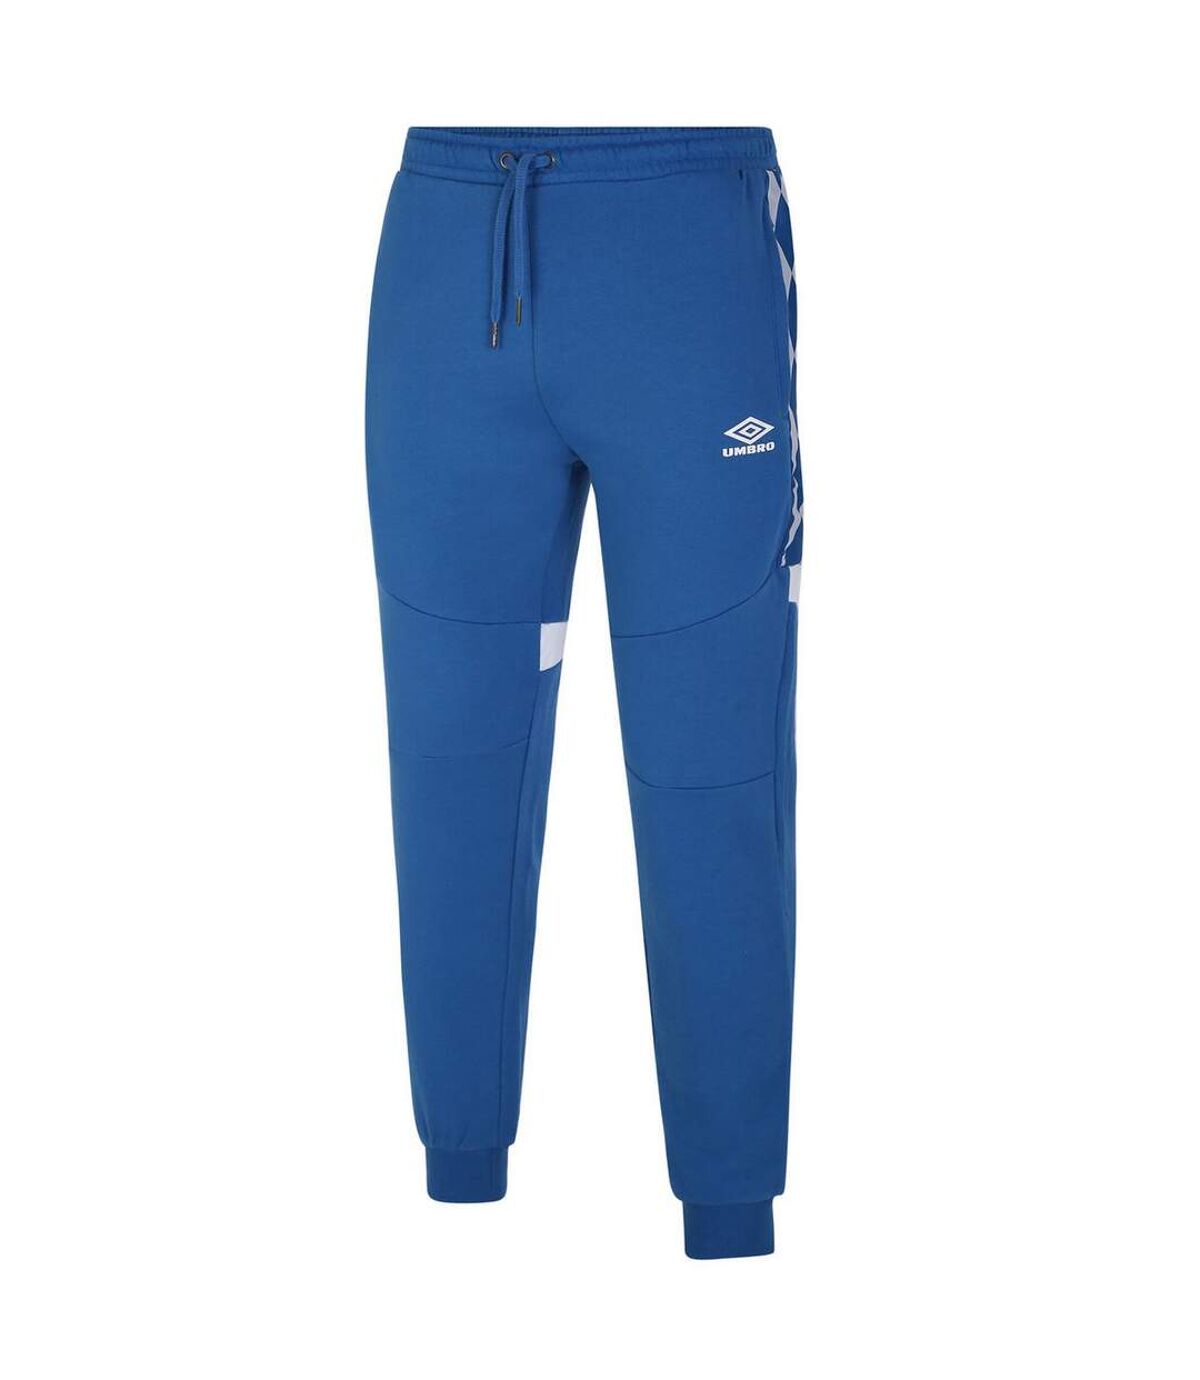 Umbro - Pantalon de jogging DIAMOND - Homme (Bleu / Blanc) - UTUO386